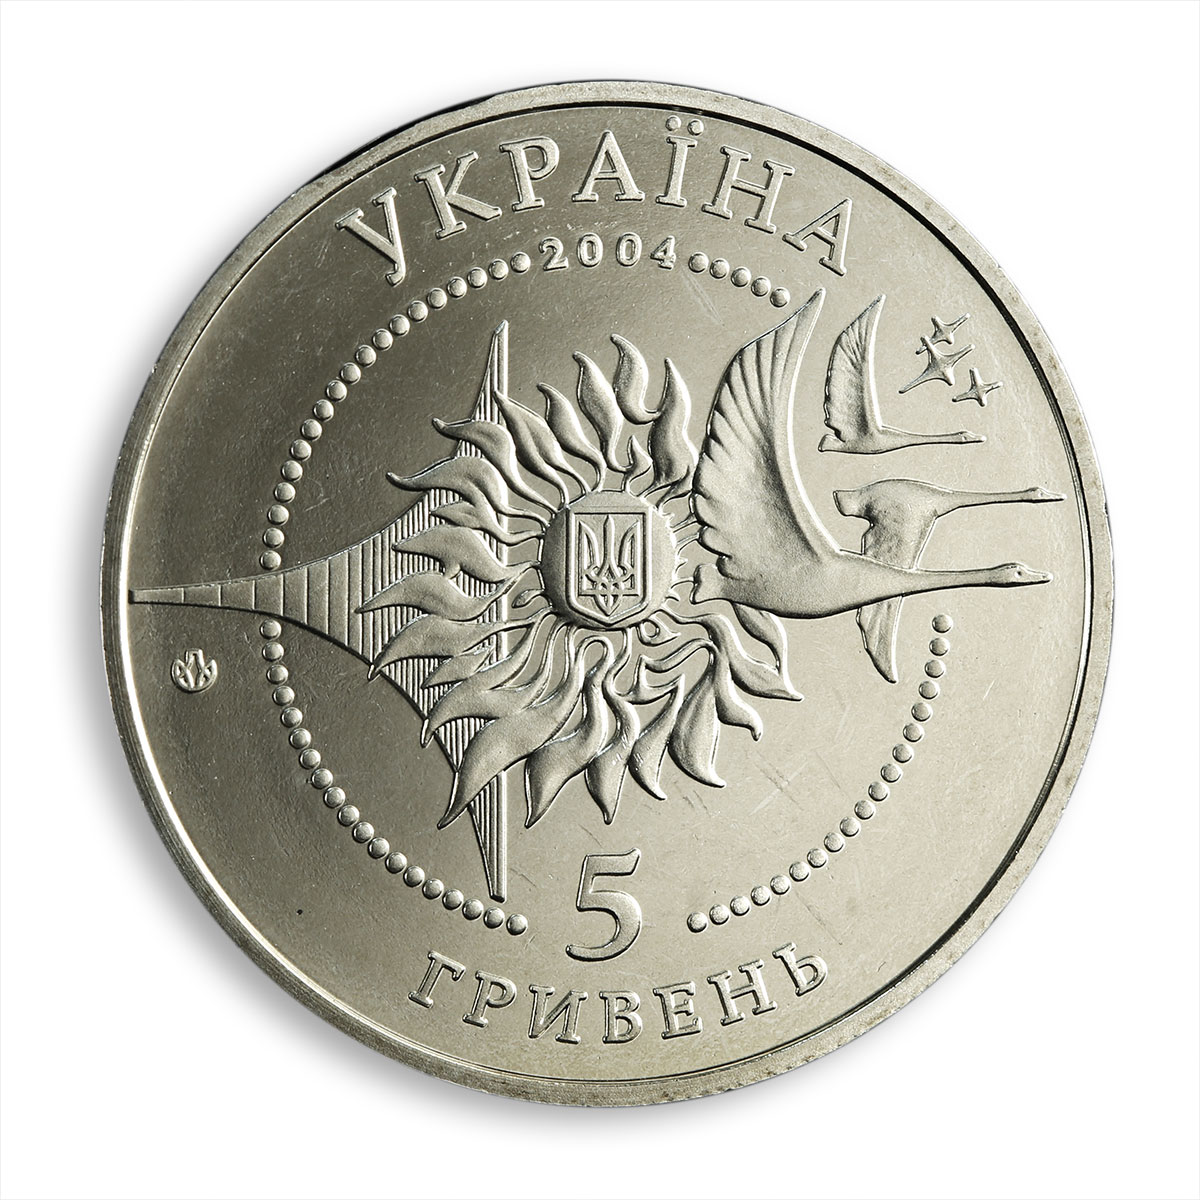 Ukraine 5 hryvnia Antonov AN-140 aircraft airplane aviation nickel coin 2004